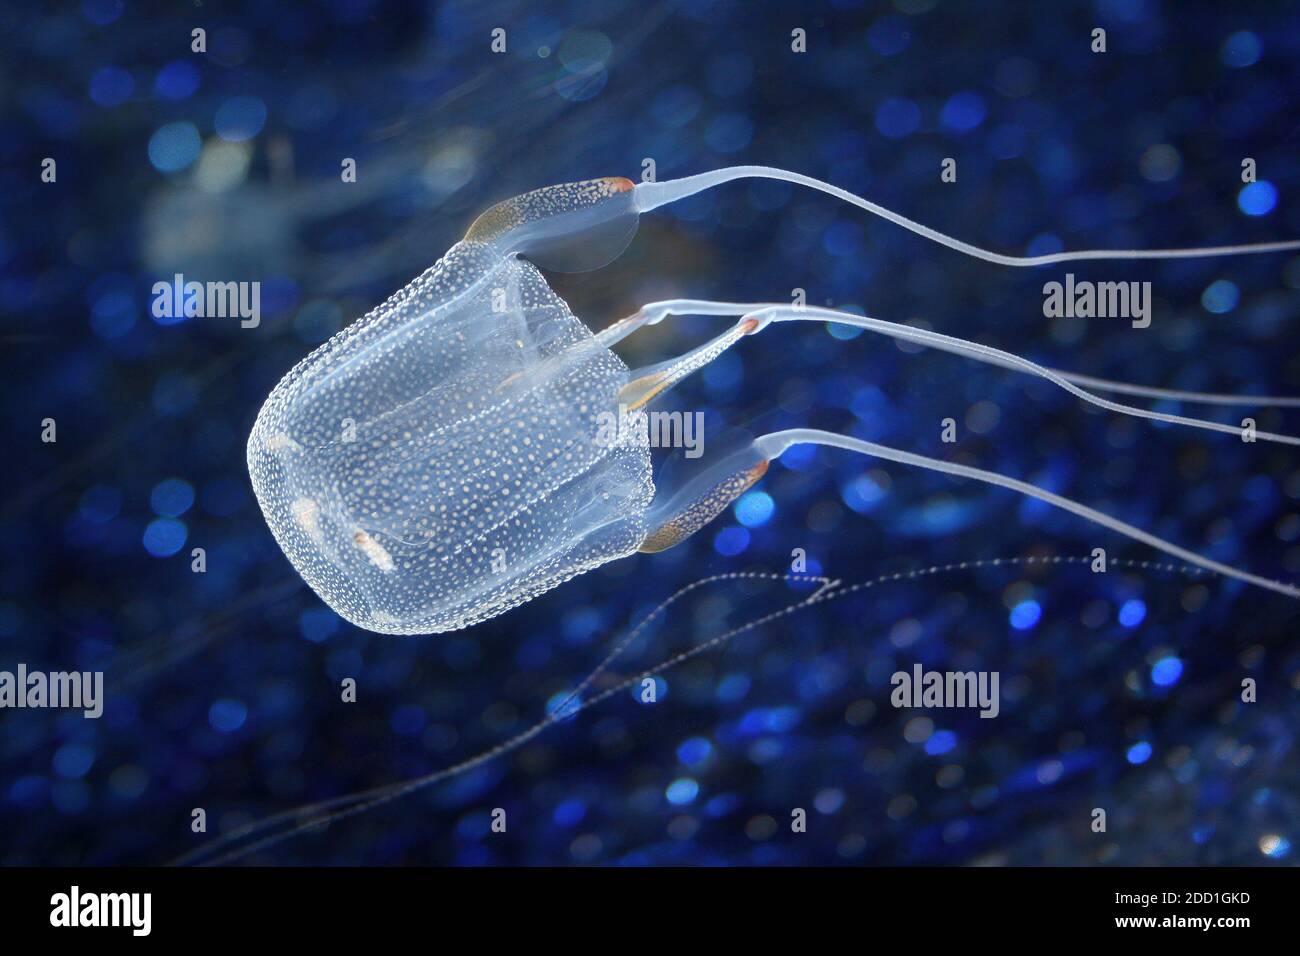 Box Jellyfish Carybdea alata Stock Photo